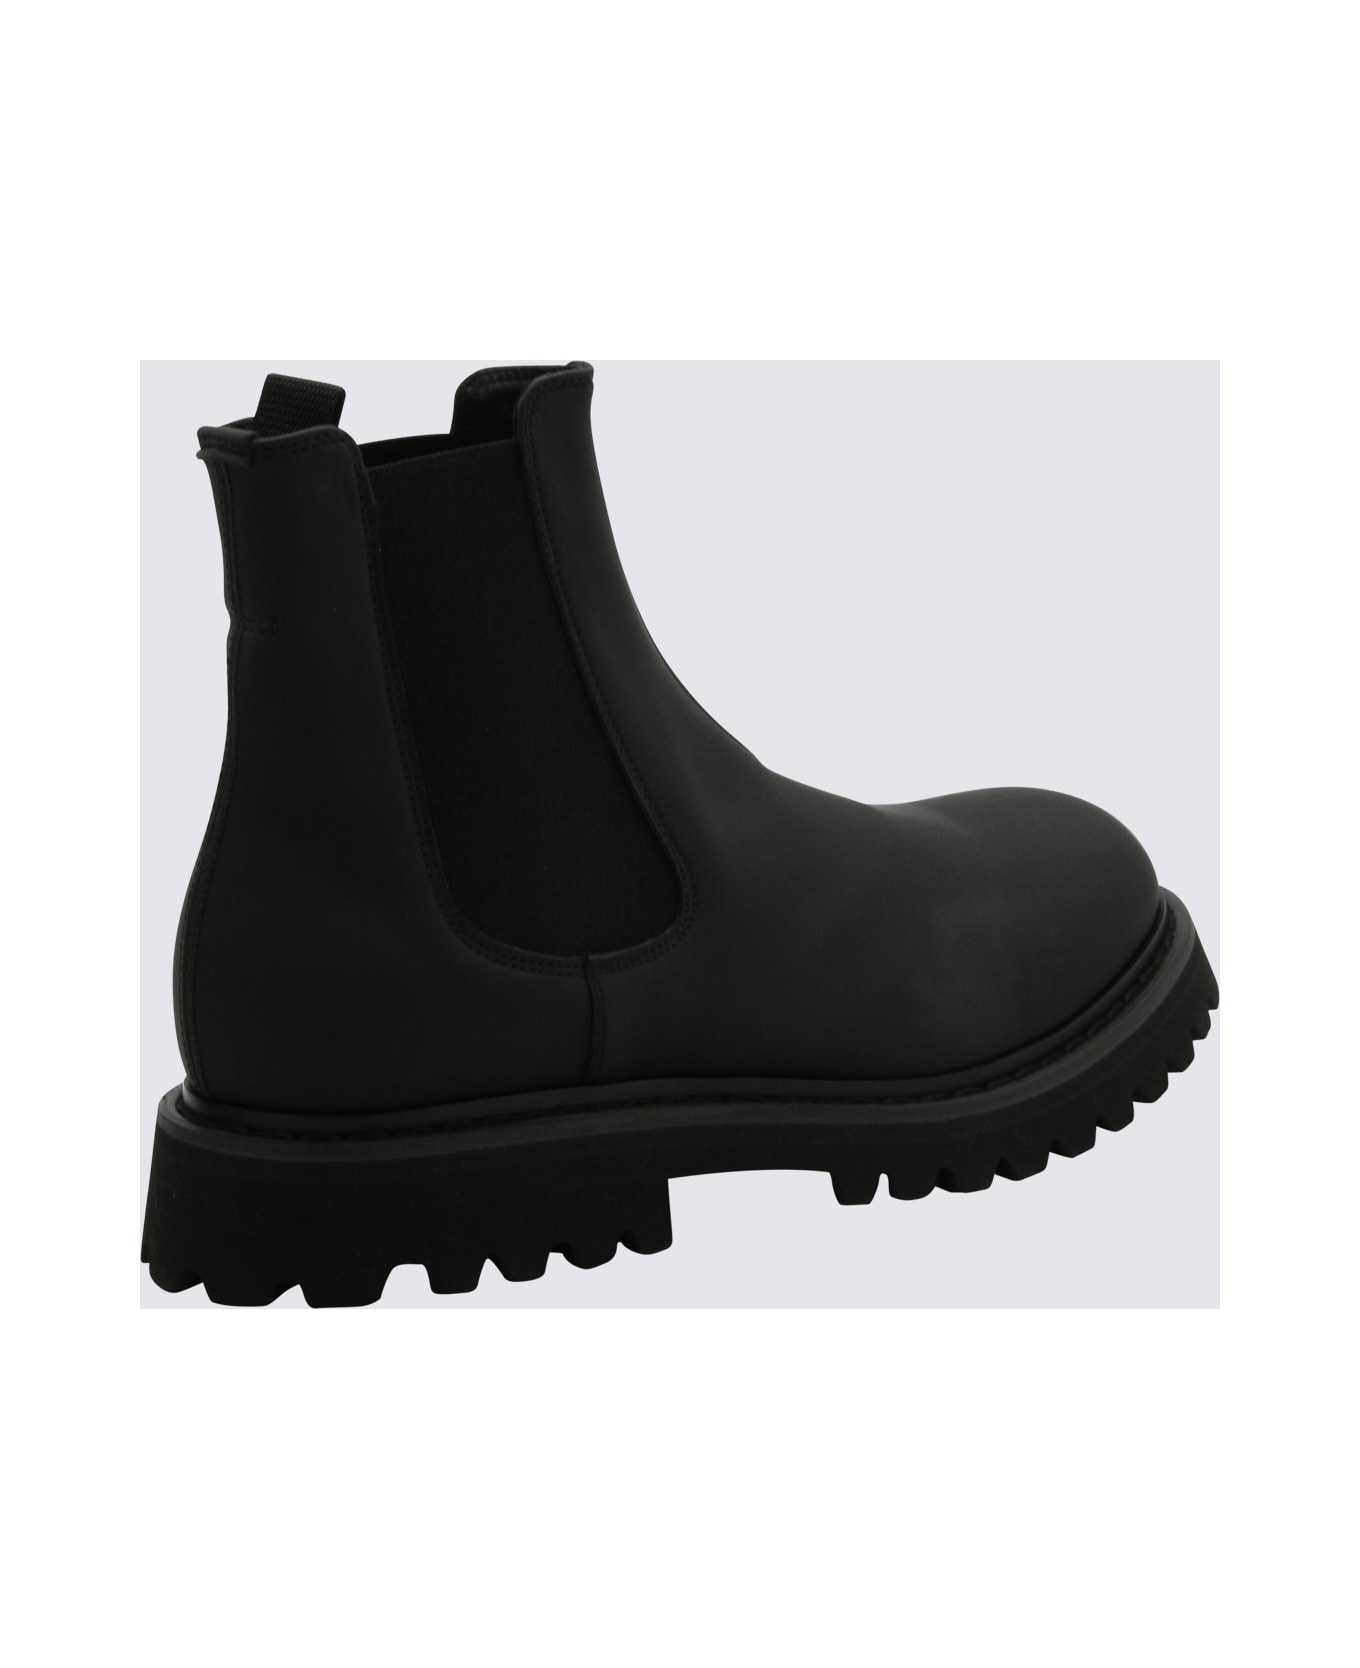 Premiata Black Leather Beatle Boots - Black ブーツ